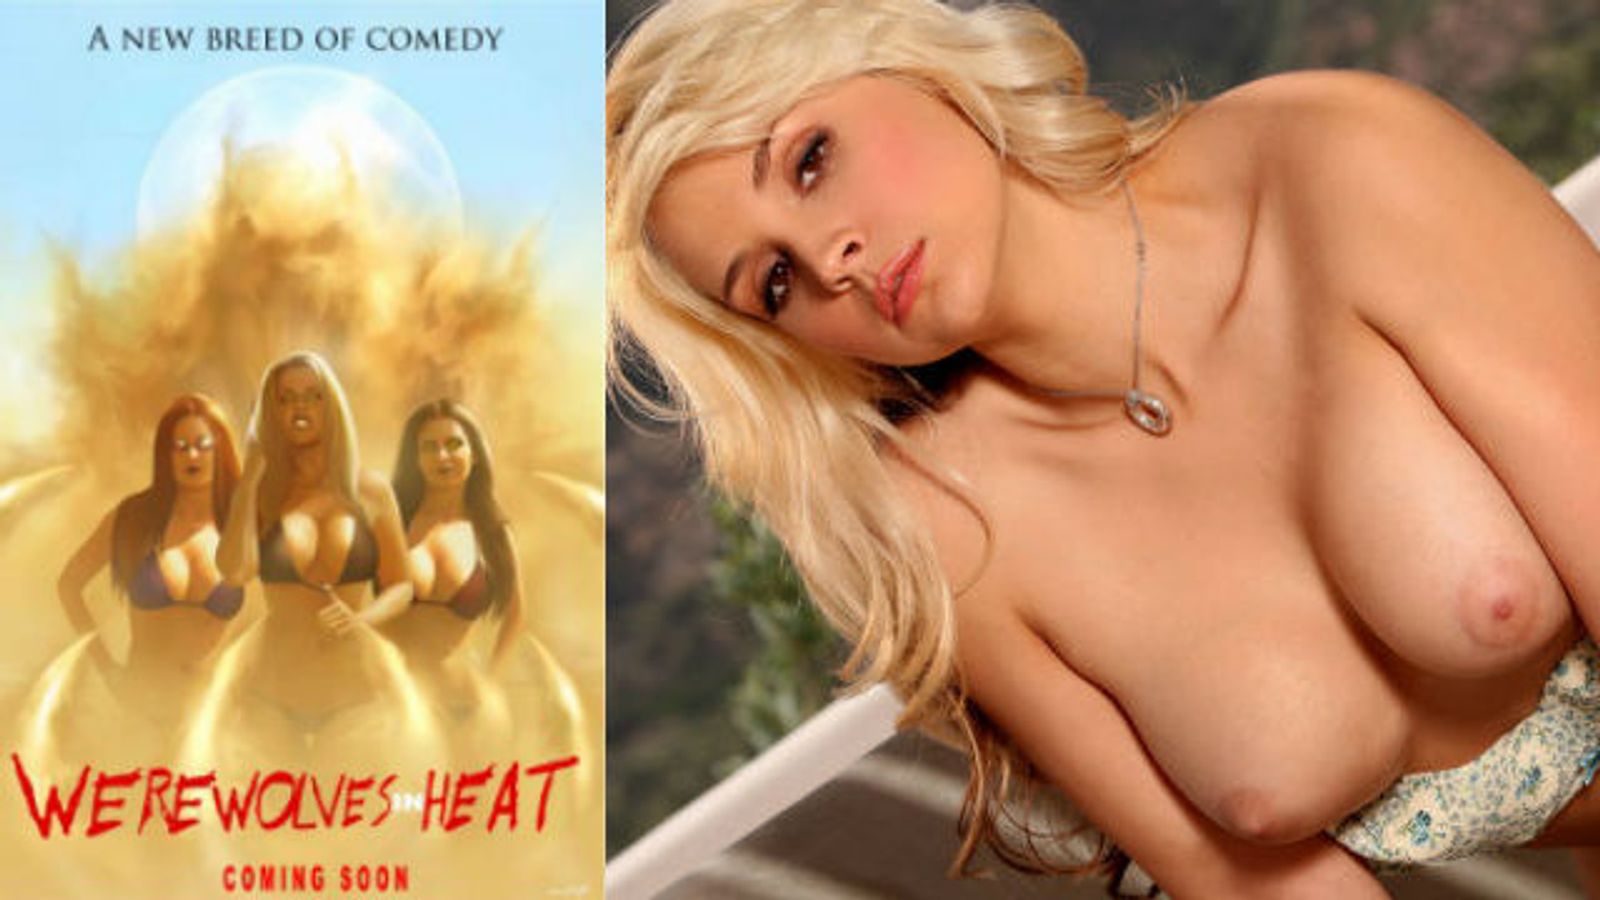 Sarah Vandella Featured in Mainstream Hor-Com, 'Werewolves in Heat'